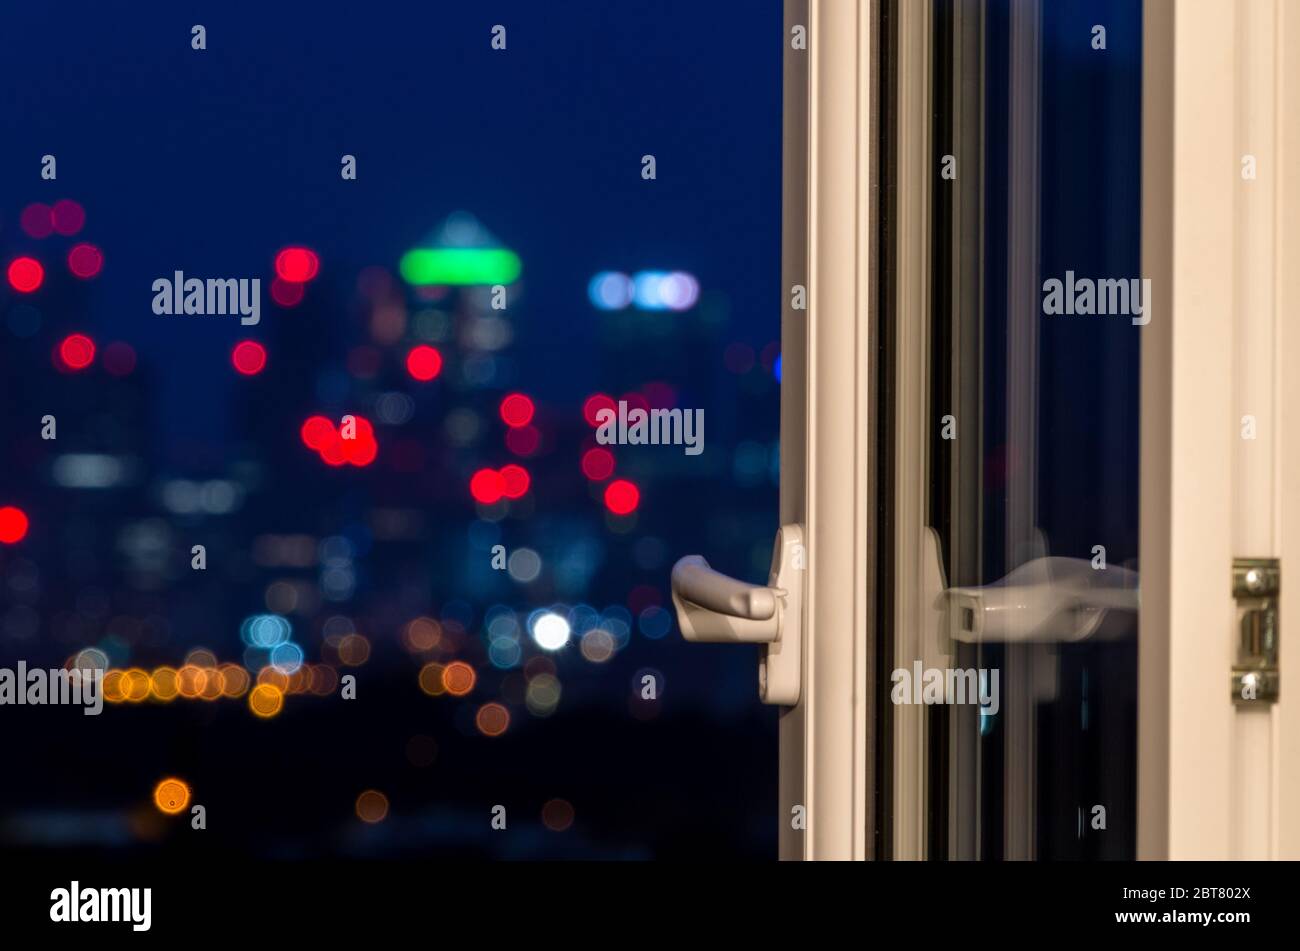 Blurred Canary Wharf skyline through the window Stock Photo